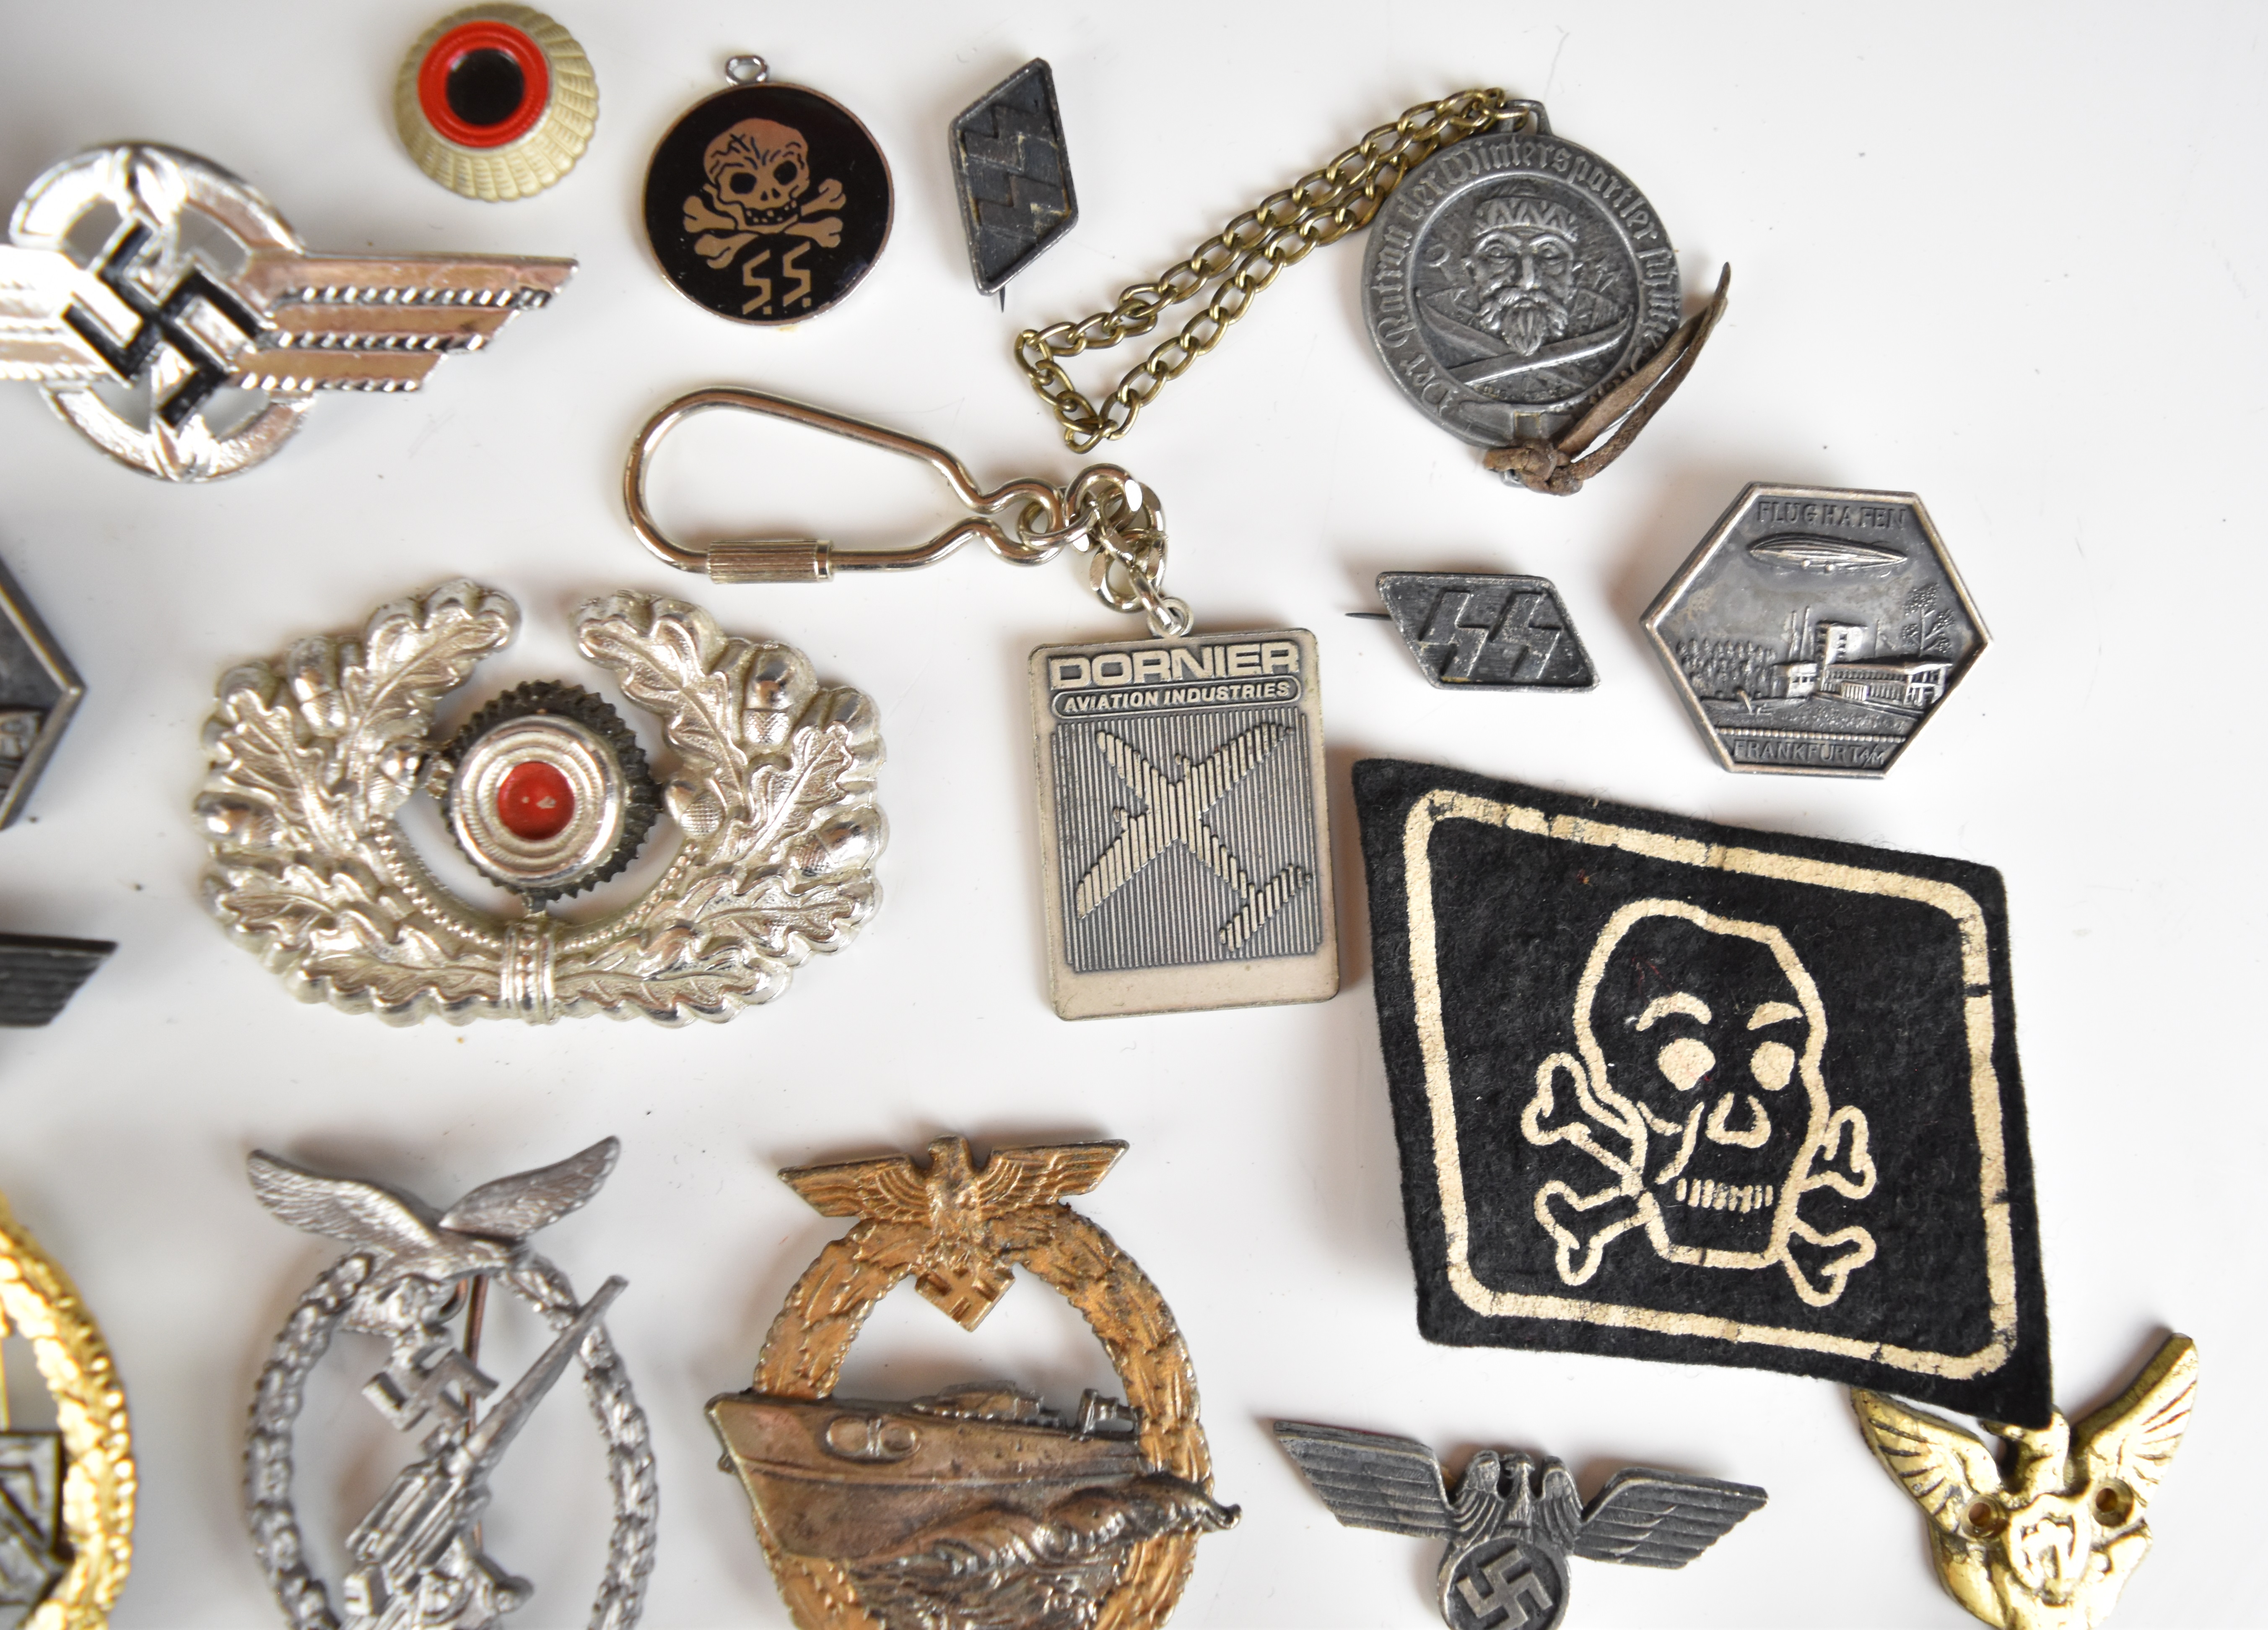 Replica German WW2 Nazi Third Reich badges, insignia and medals including High Seas Fleet, Artillery - Image 2 of 16